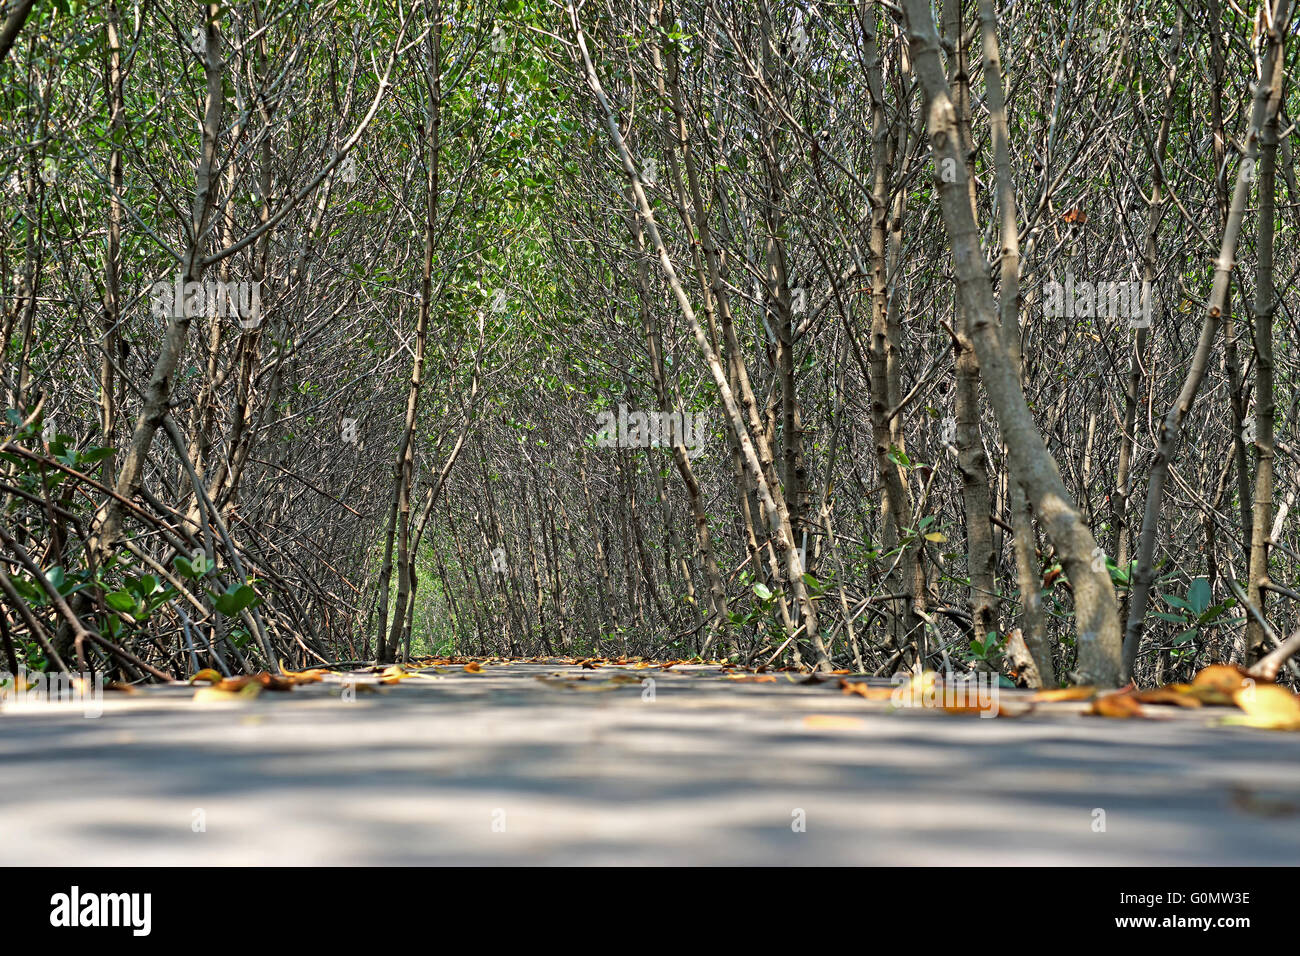 long wooden bridge walkway into mangrove forest Stock Photo